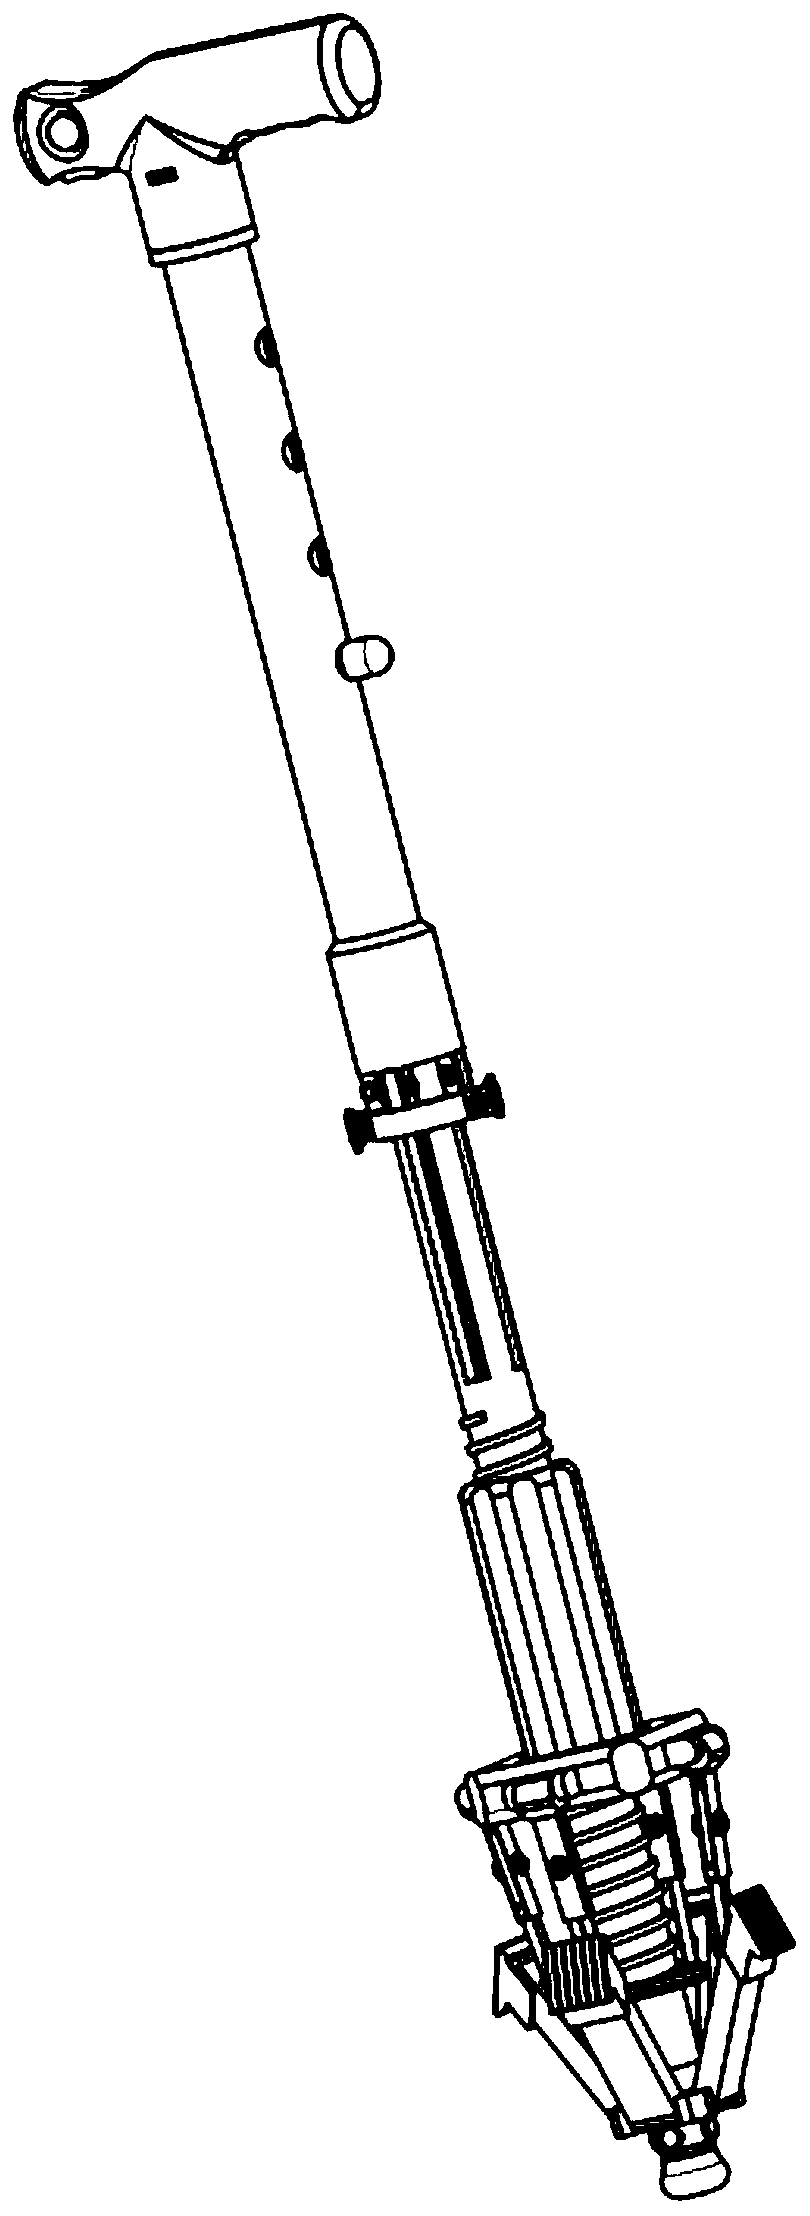 Dual-purpose deformable walking stick